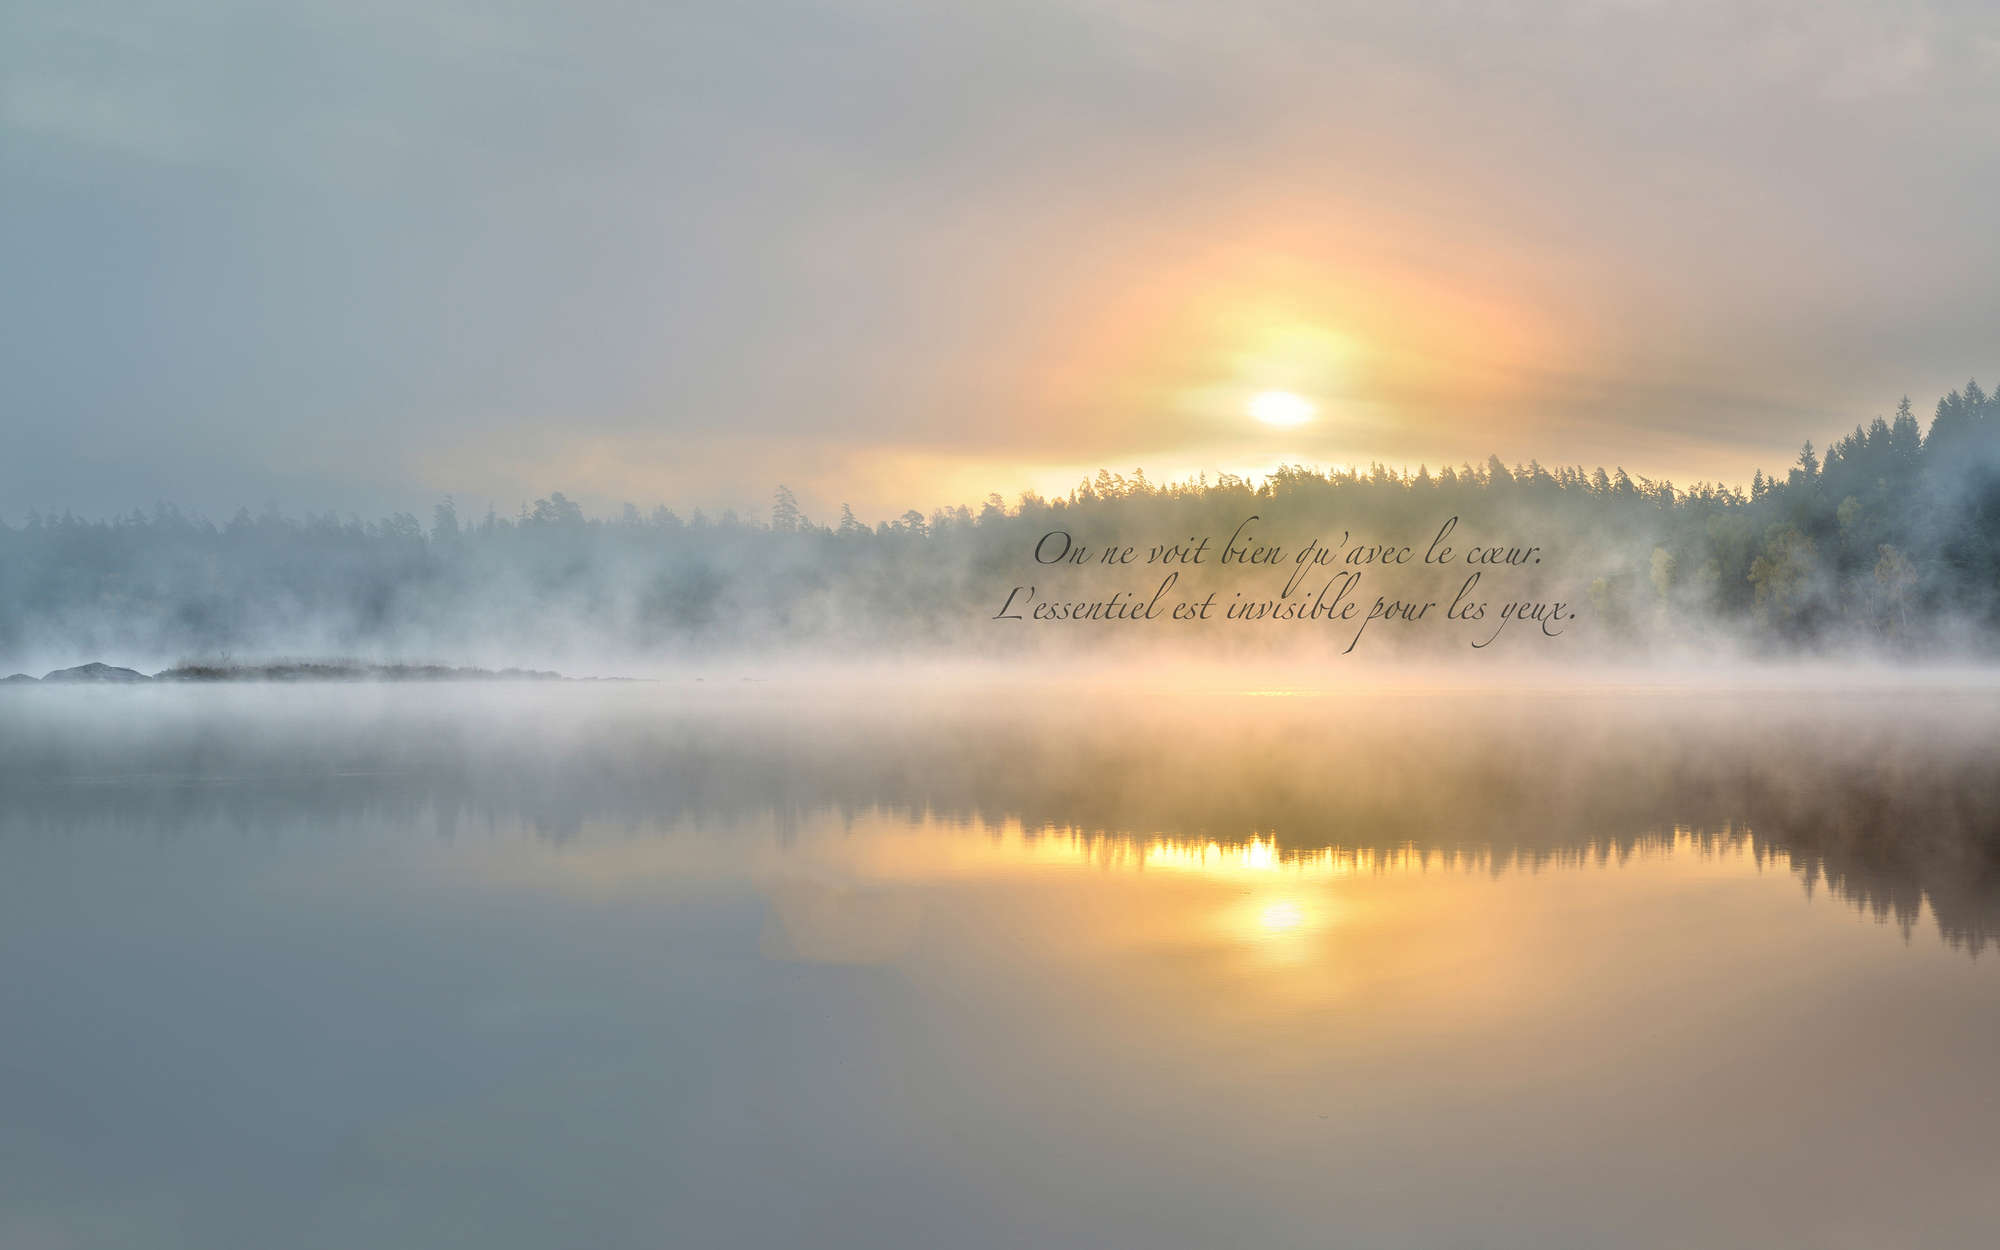             Photo wallpaper foggy lake with lettering - Matt smooth fleece
        